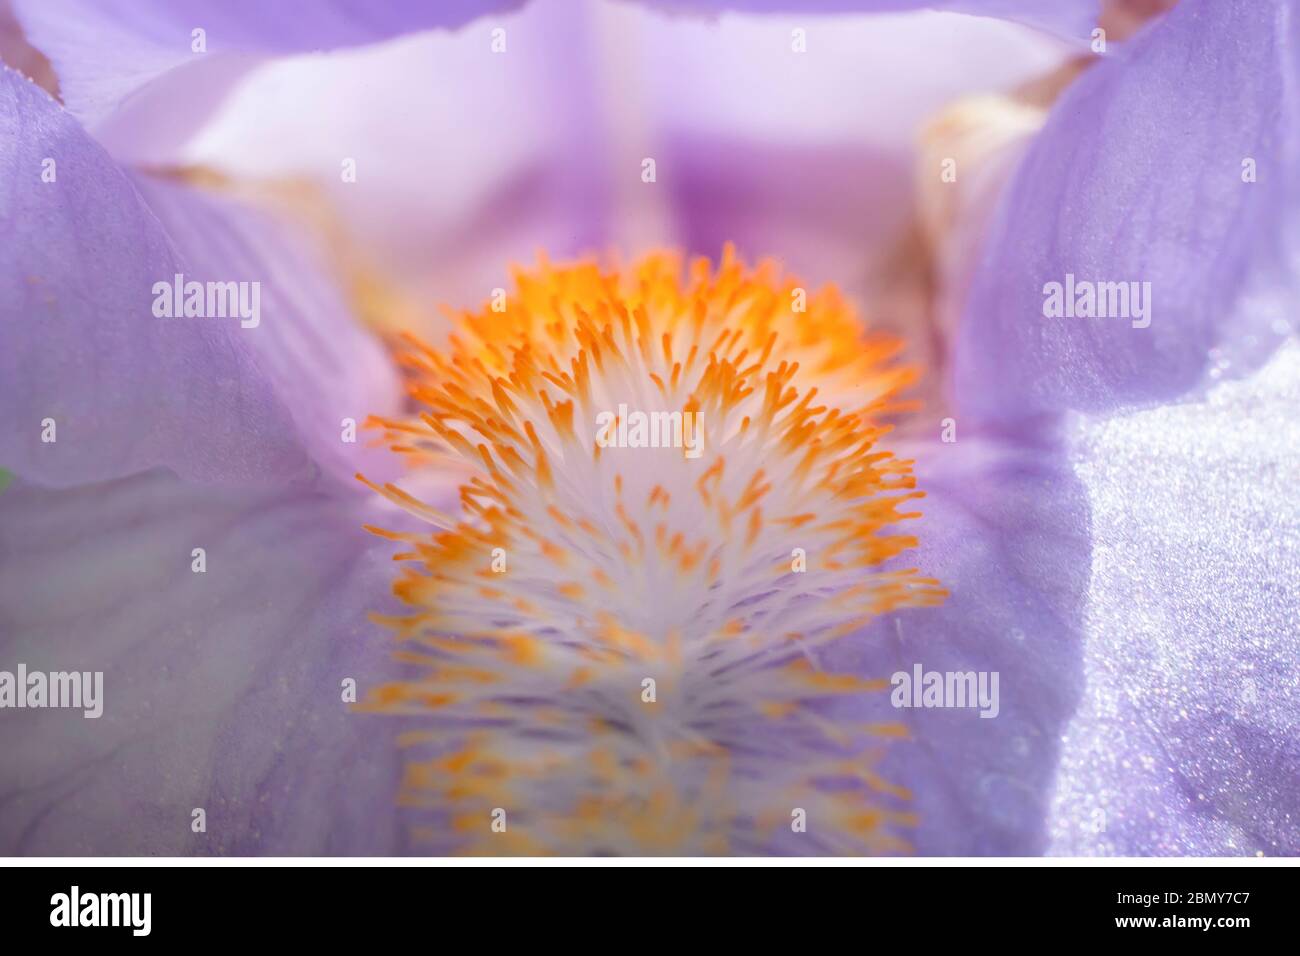 Macro Photo of Iris Flower Orange Beard Stock Photo